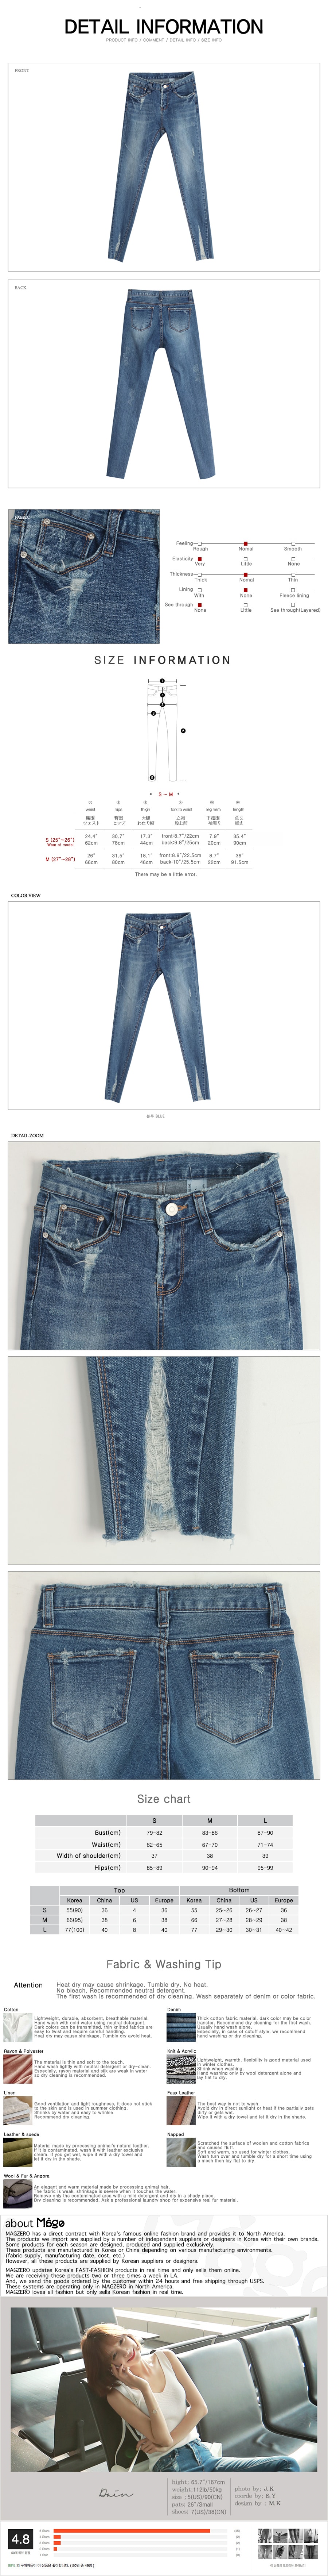 KOREA Distressed Hem Skinny Jeans #Blue M(27-28) [Free Shipping]